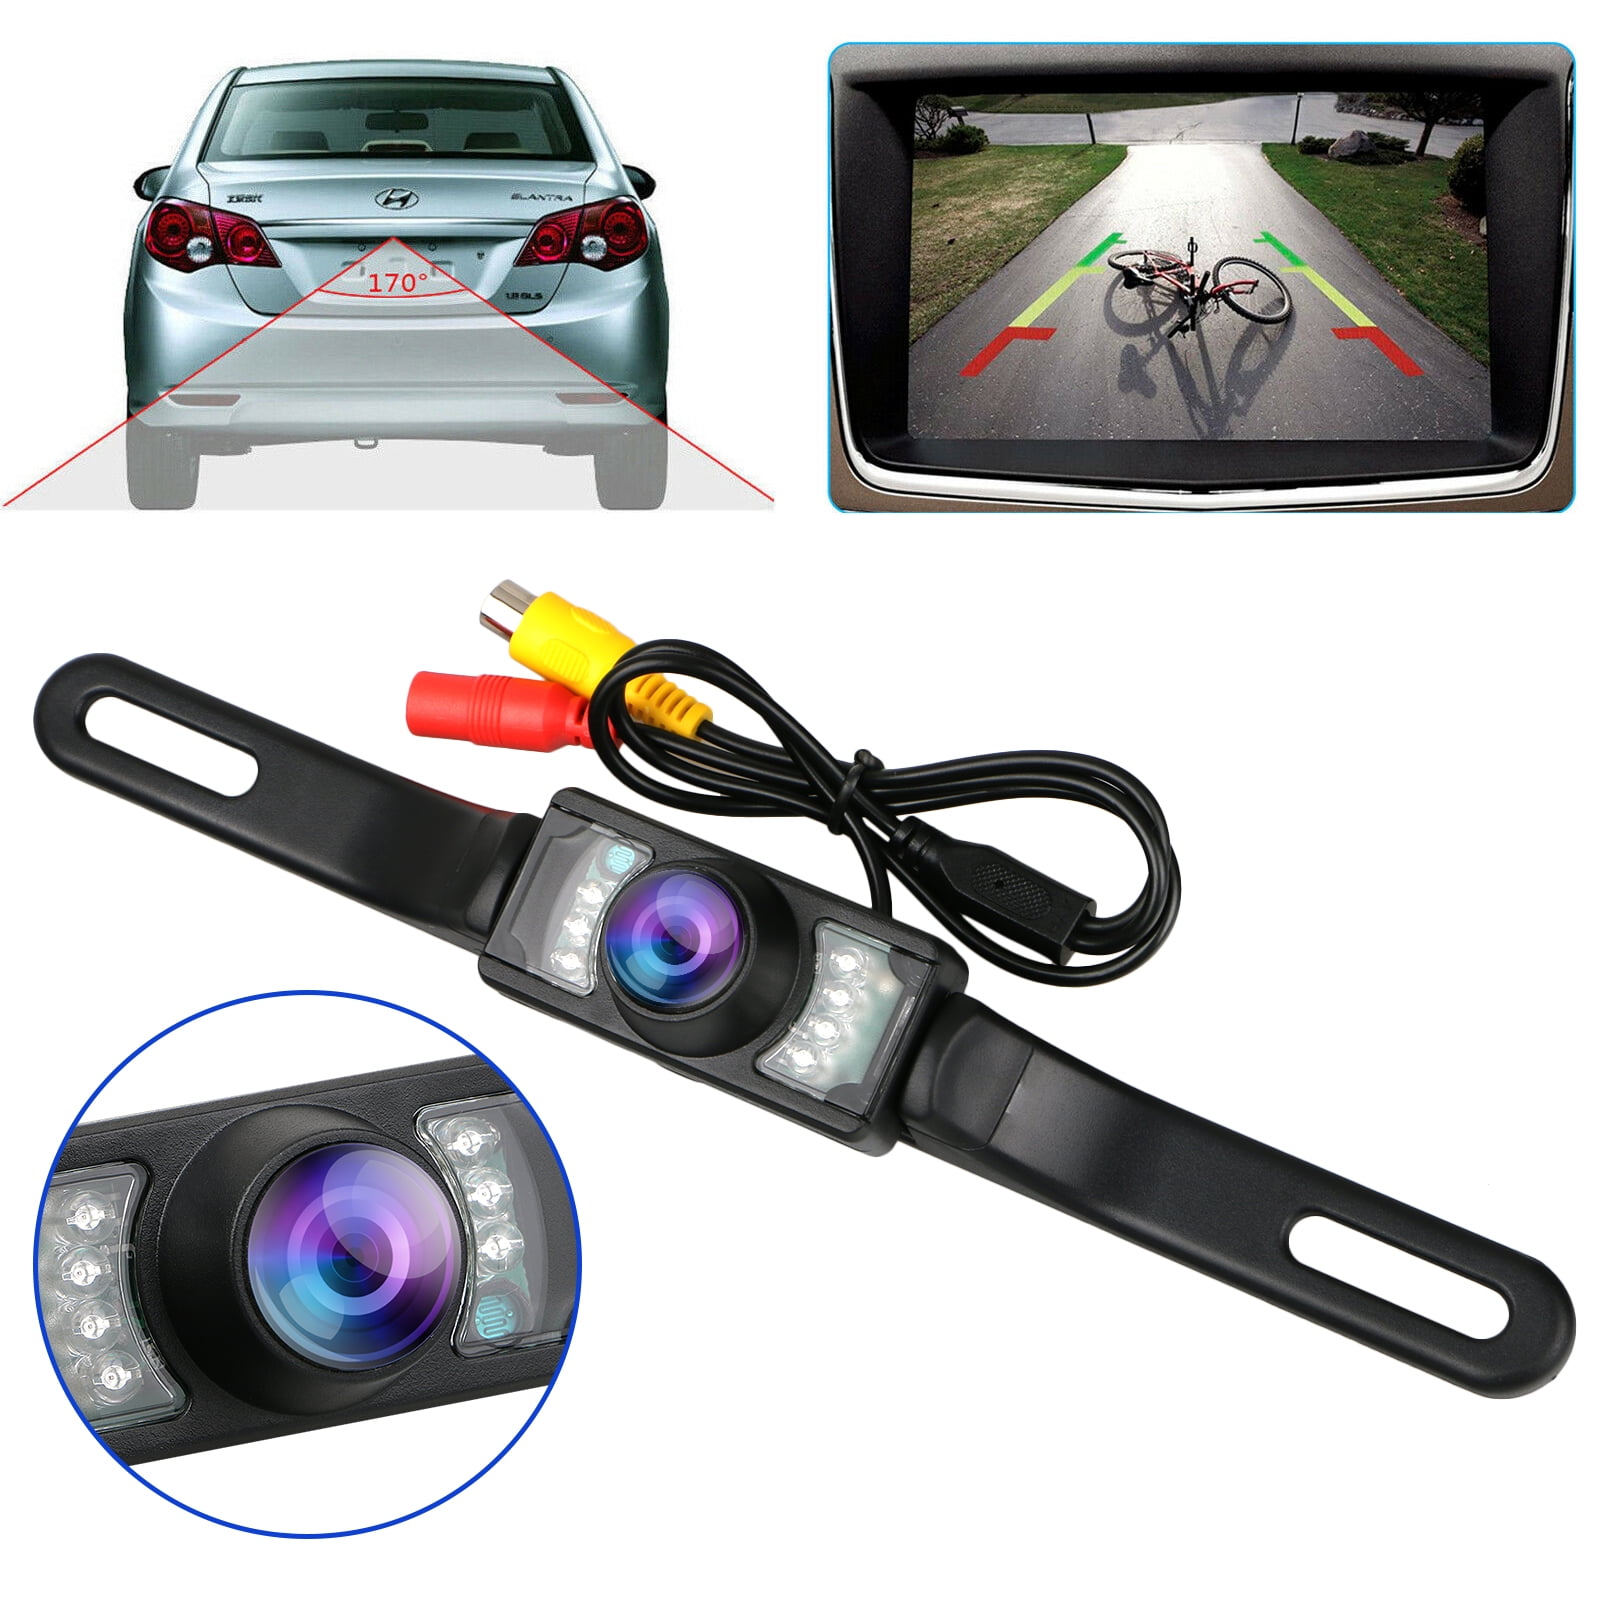 170° Wide Angle Auto Car Parking Reverse Backup Camera Night Vision Waterproof